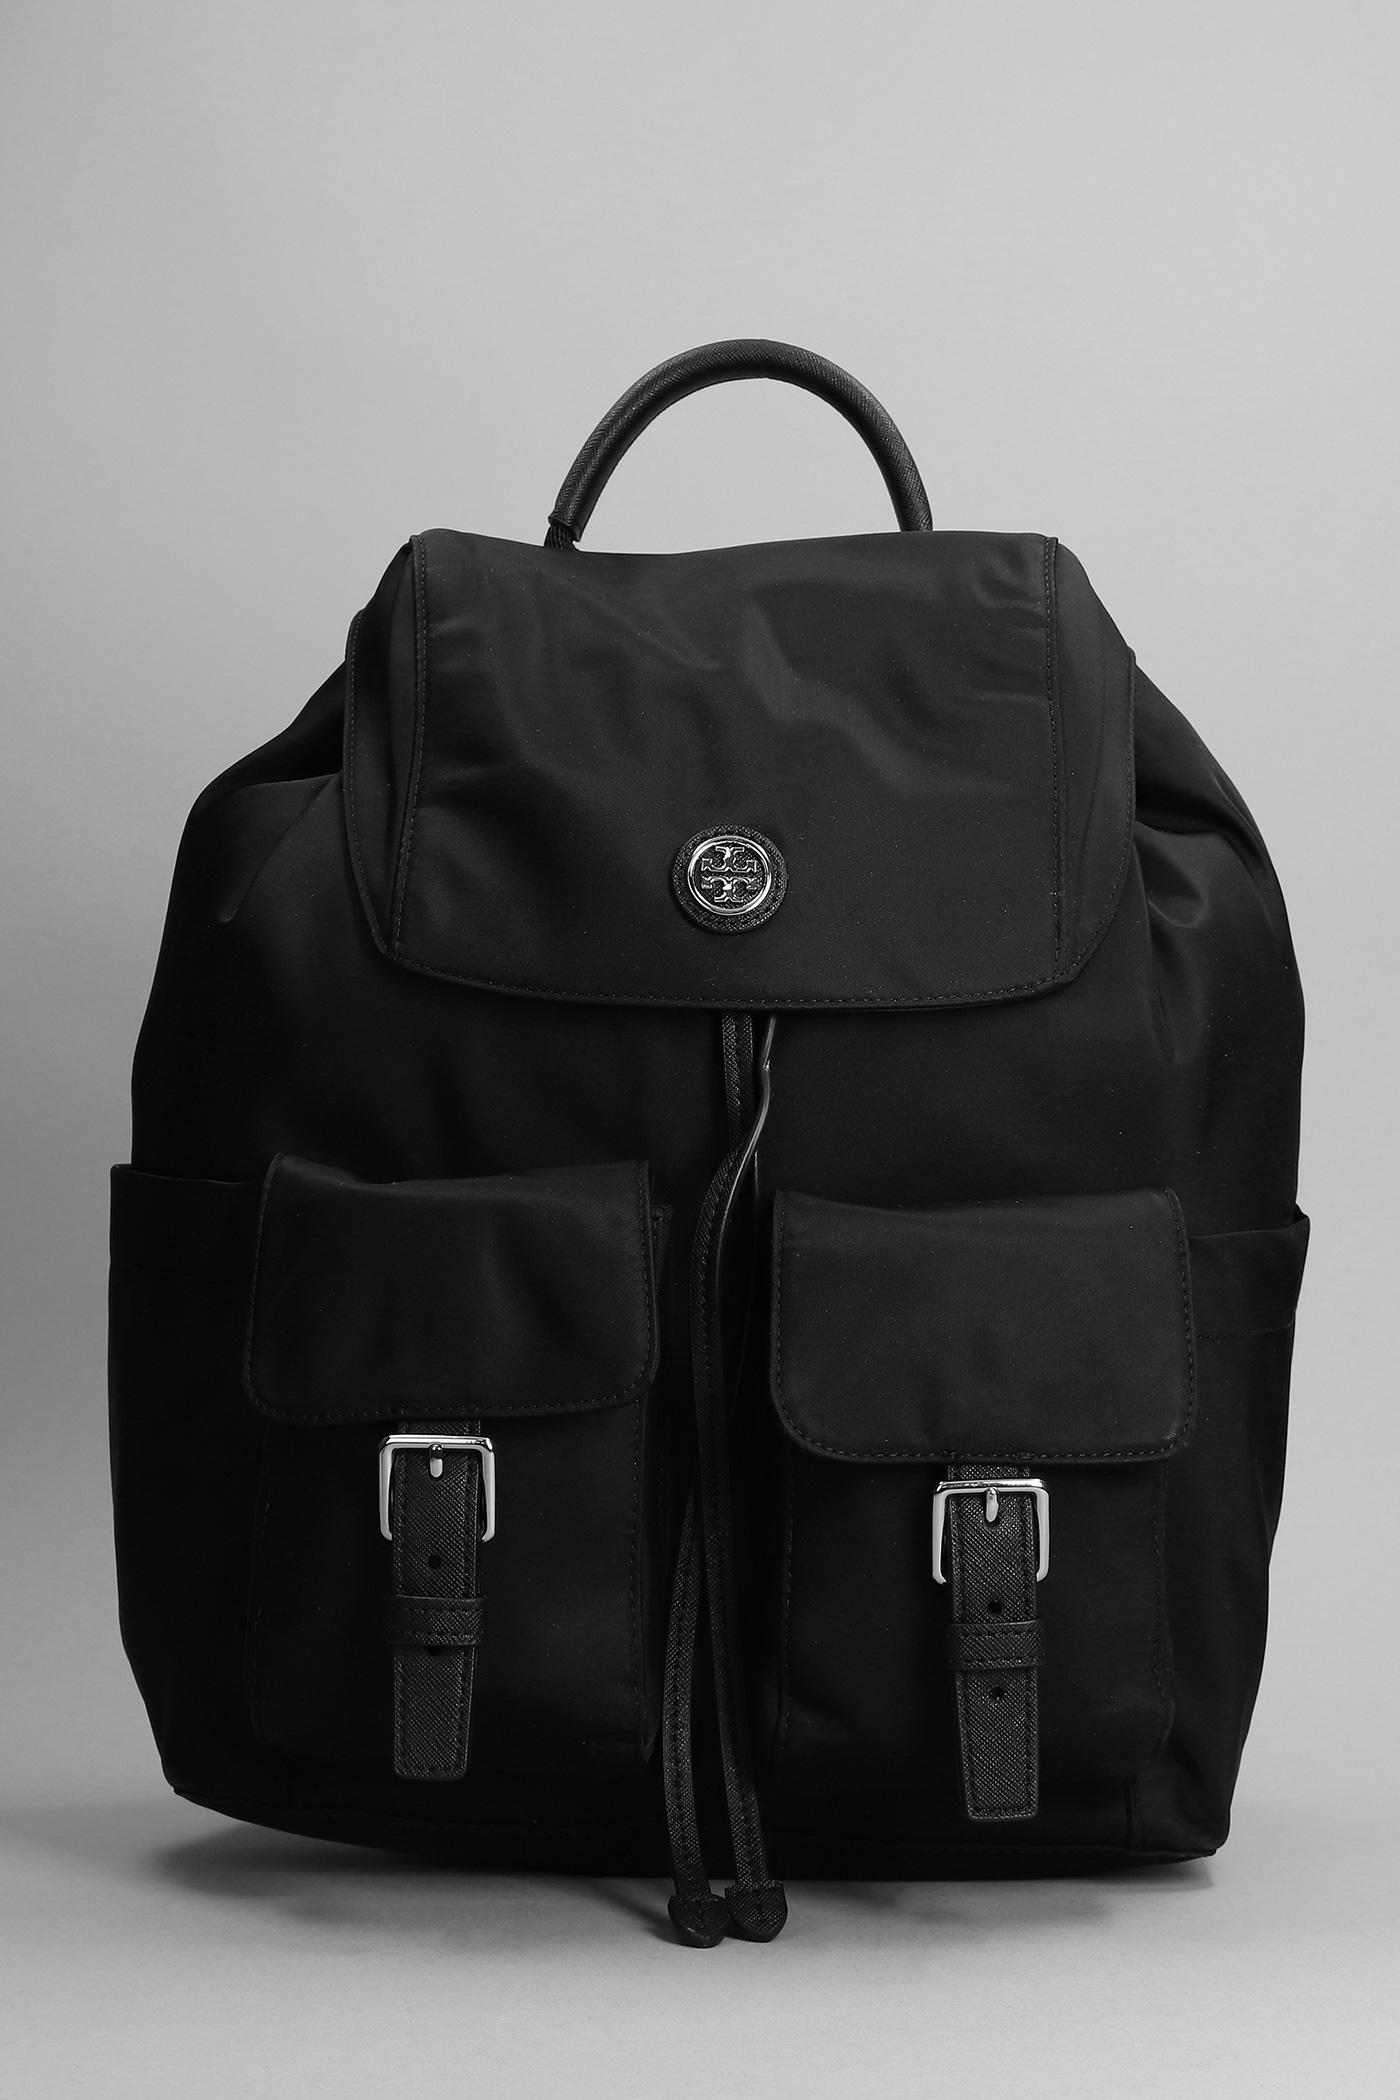 Tory Burch Backpack In Black Nylon | Lyst